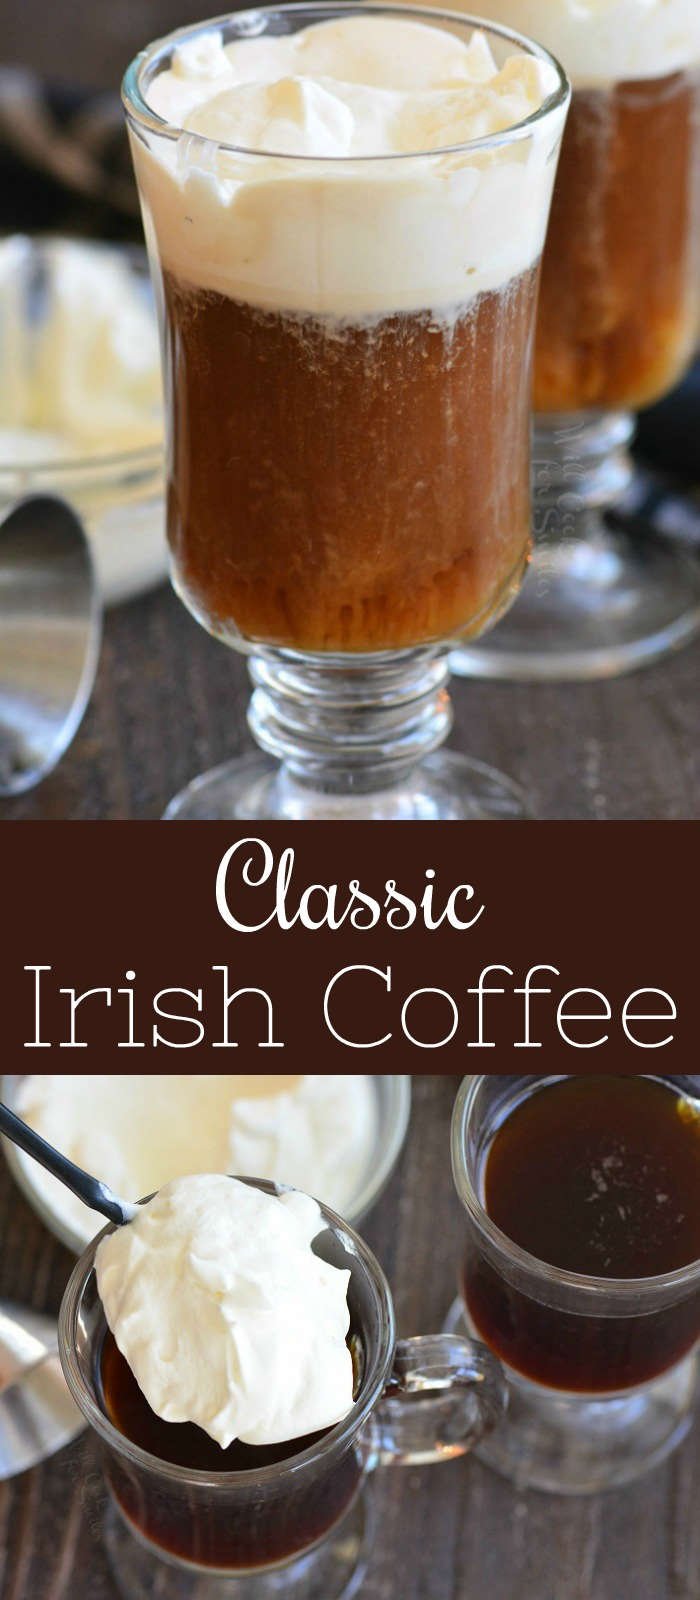 Irish Coffee in a glass collage